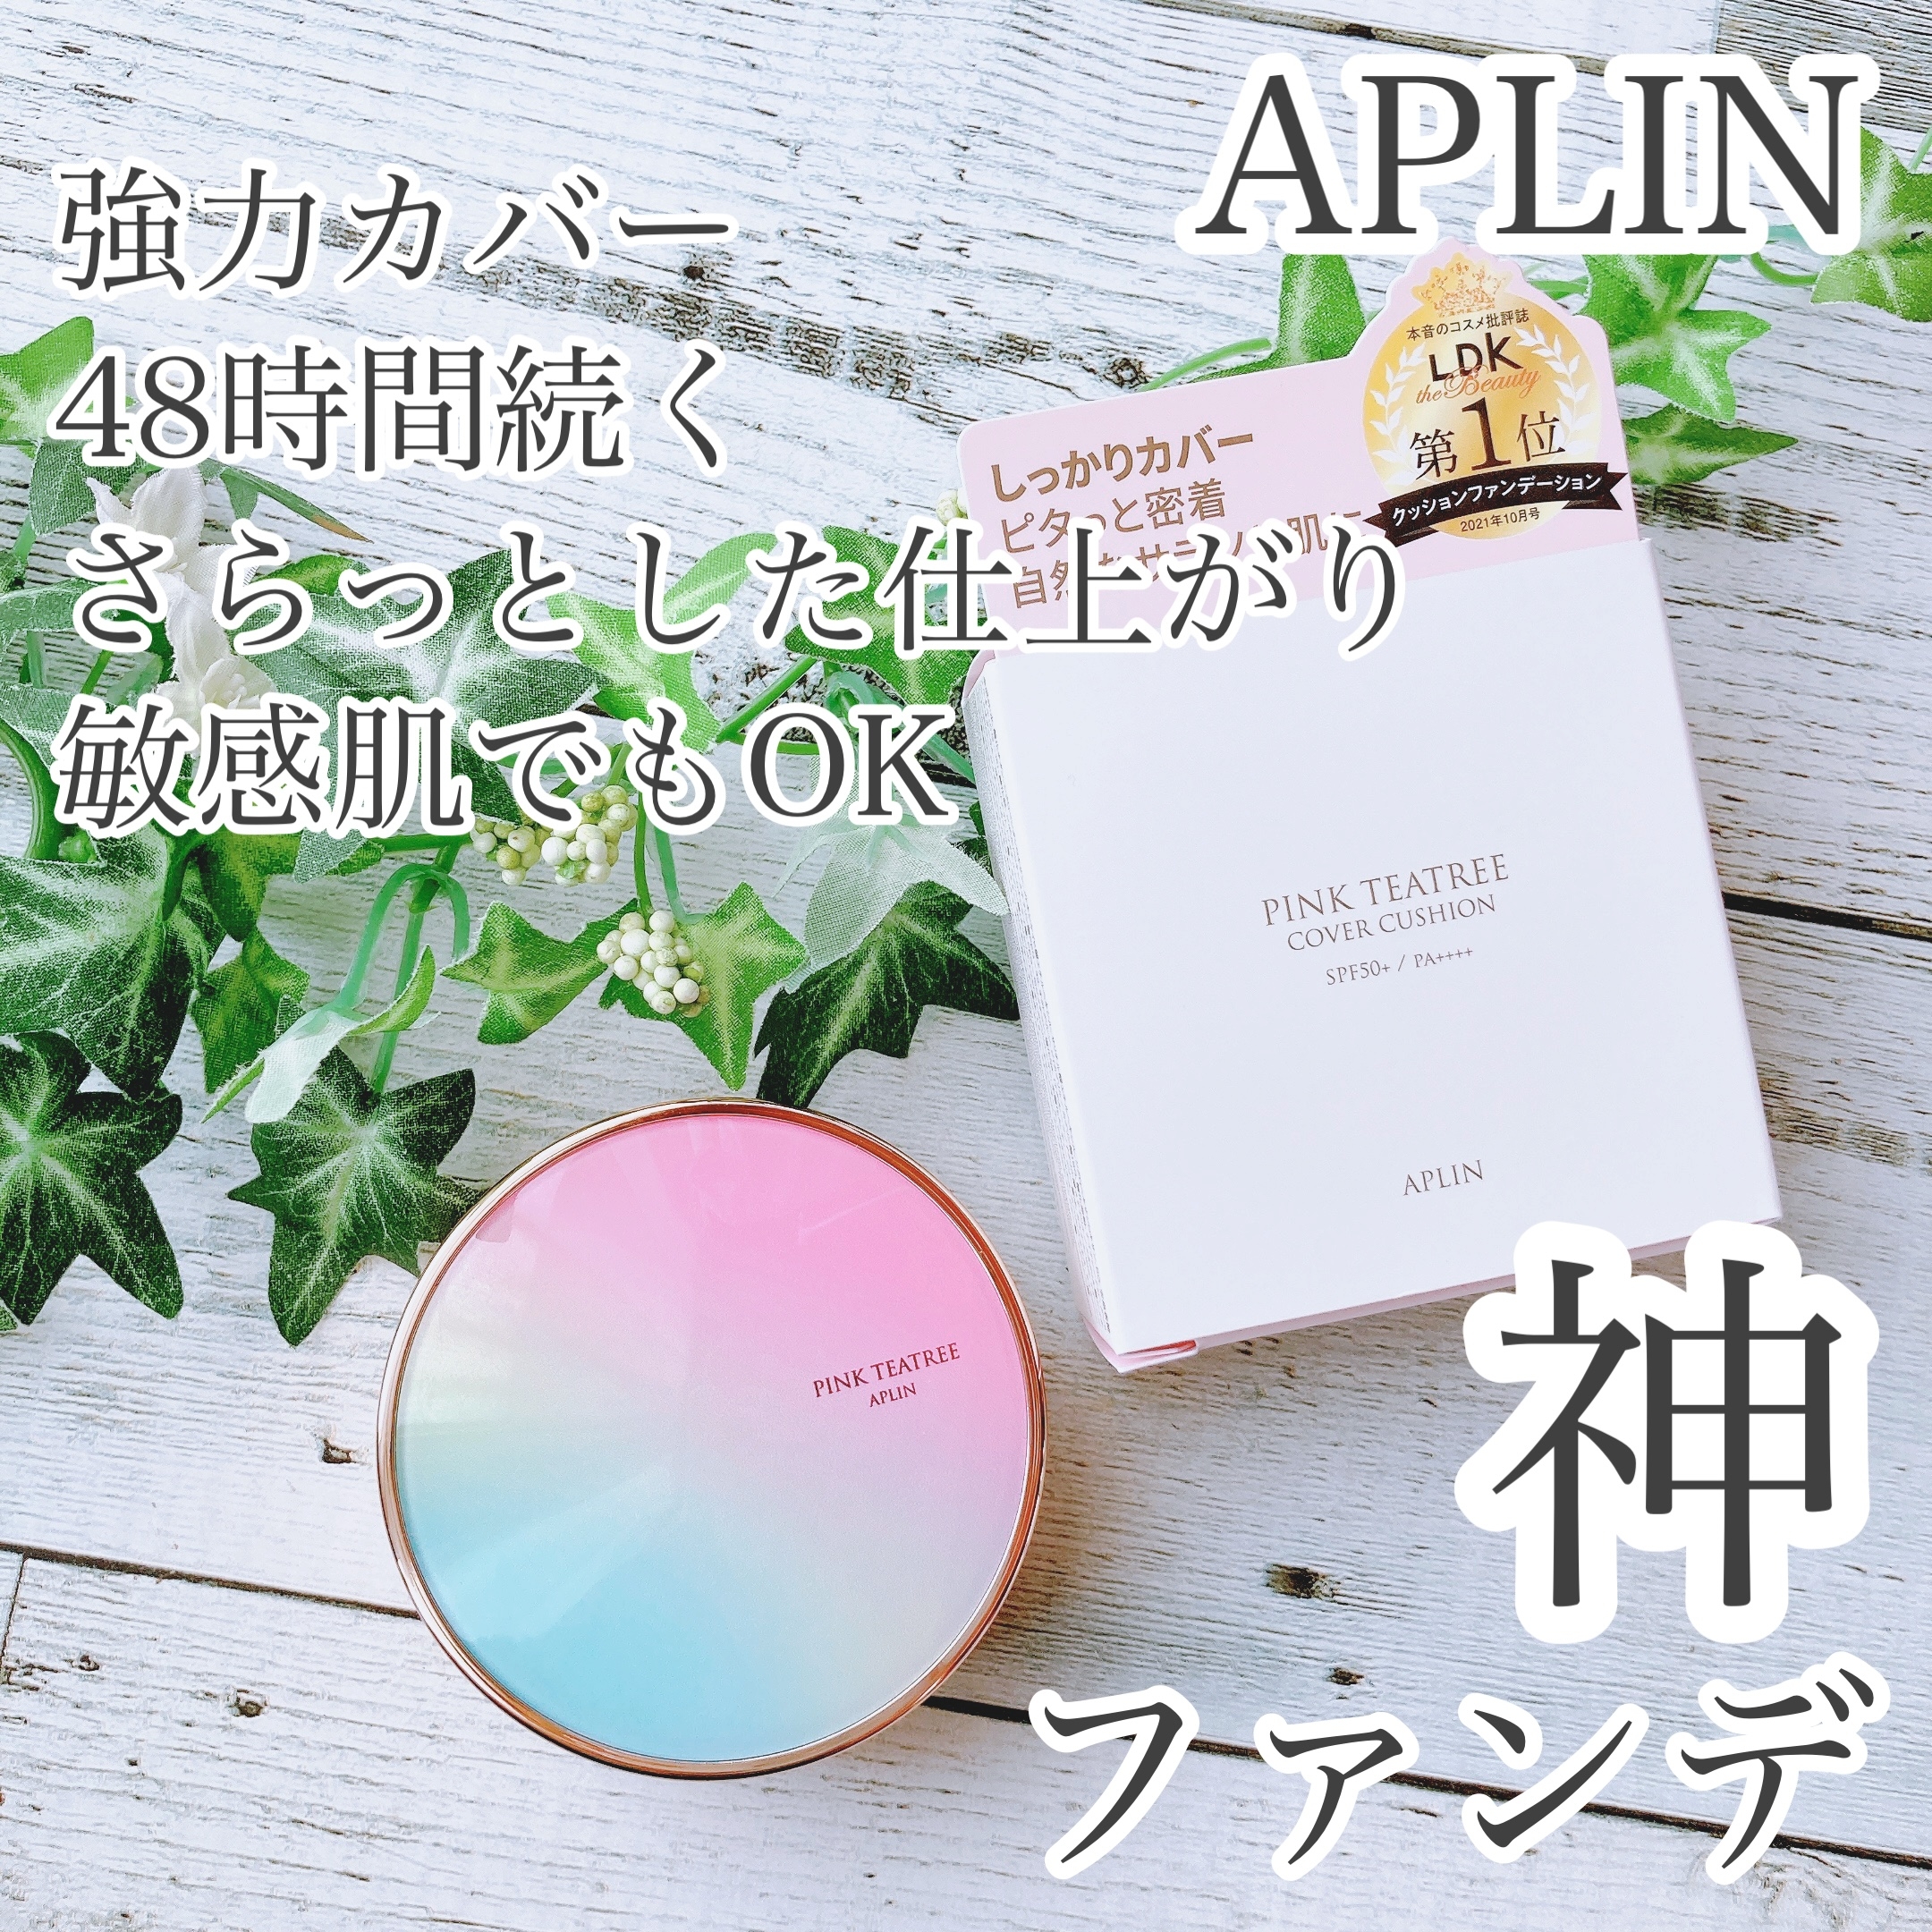 APLIN(アプリン) ピンクティーツリーカバークッションの良い点・メリットに関するおかんさんの口コミ画像1